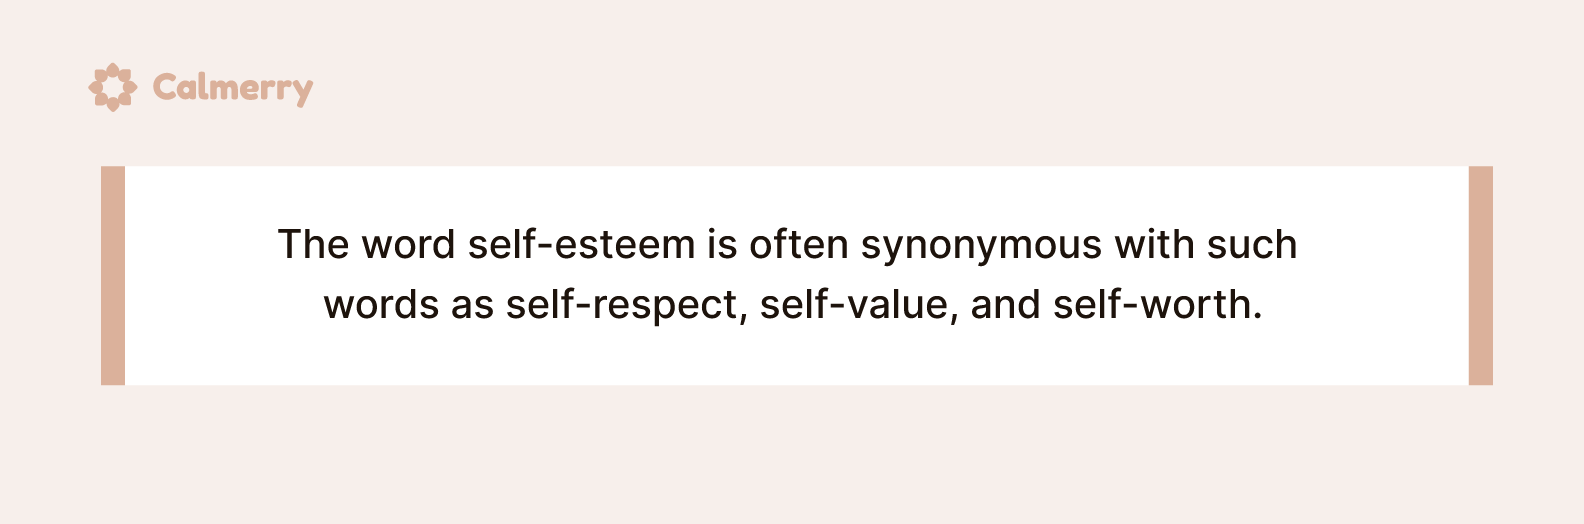 self-esteem synonymous